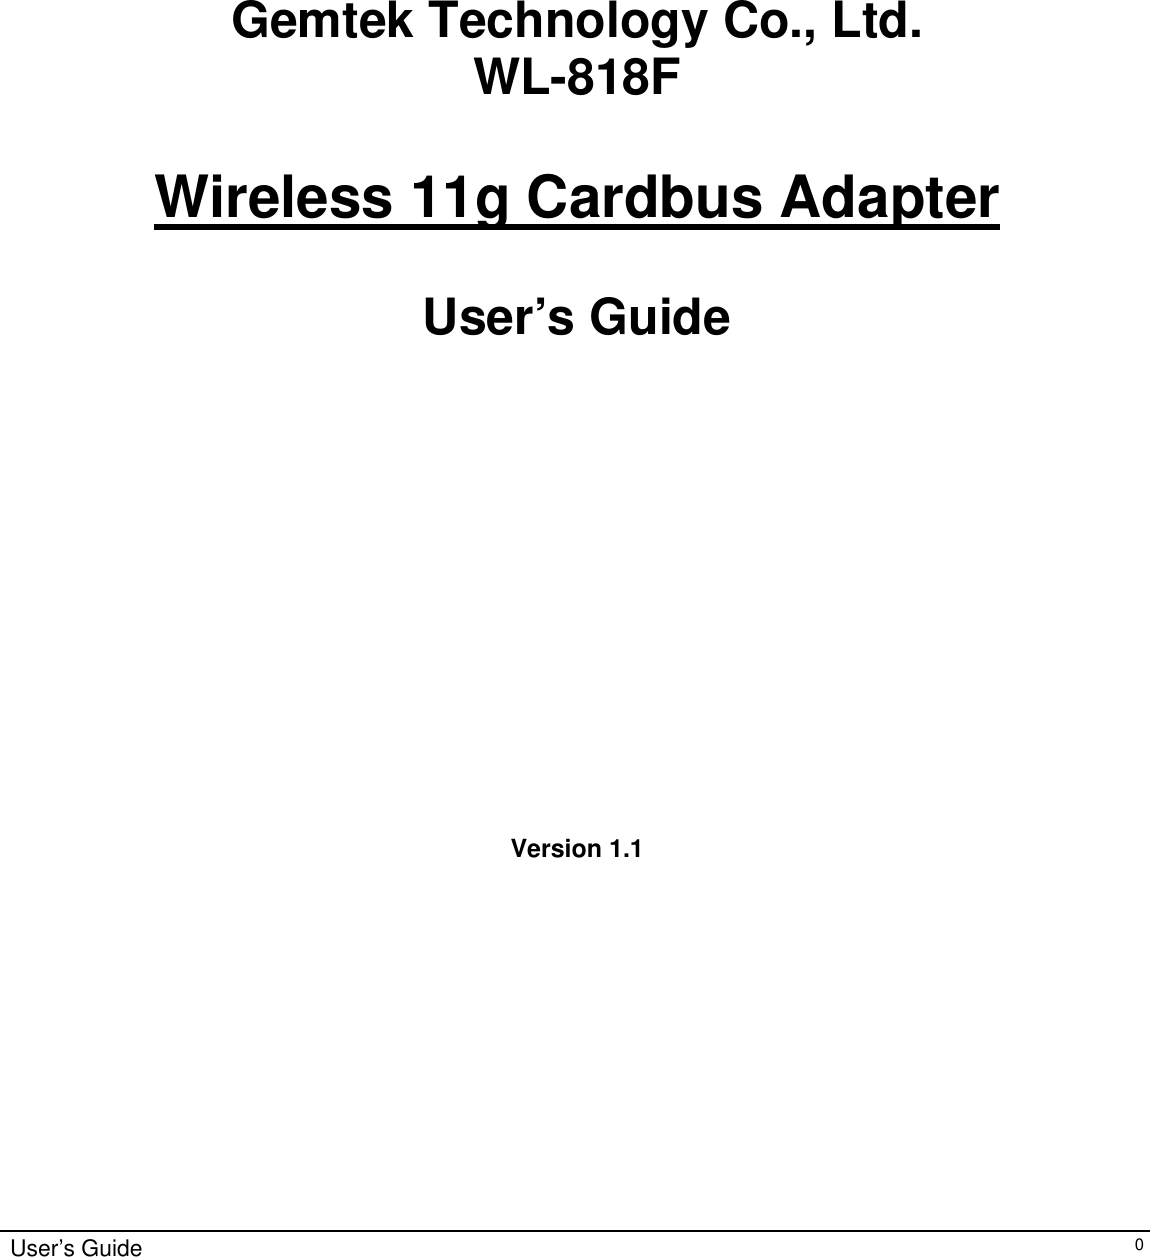                                                                                                                                                                                    Gemtek Technology Co., Ltd. WL-818F  Wireless 11g Cardbus Adapter  User’s Guide                  Version 1.1               User’s Guide   0